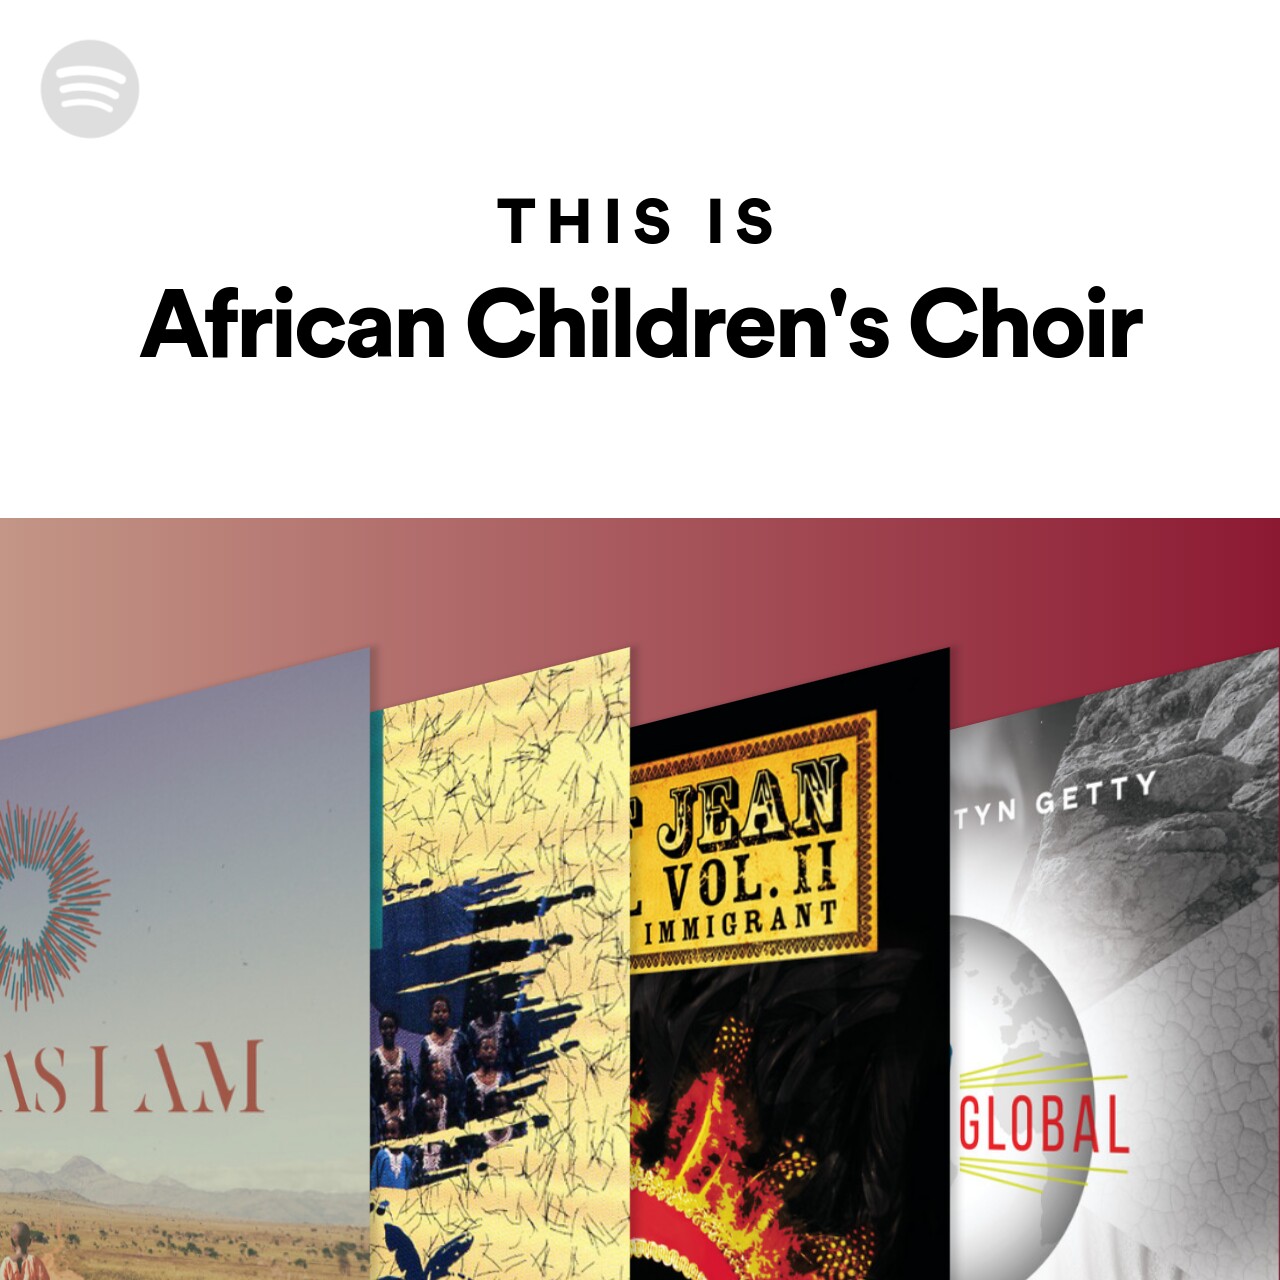 This Is African Children's Choir